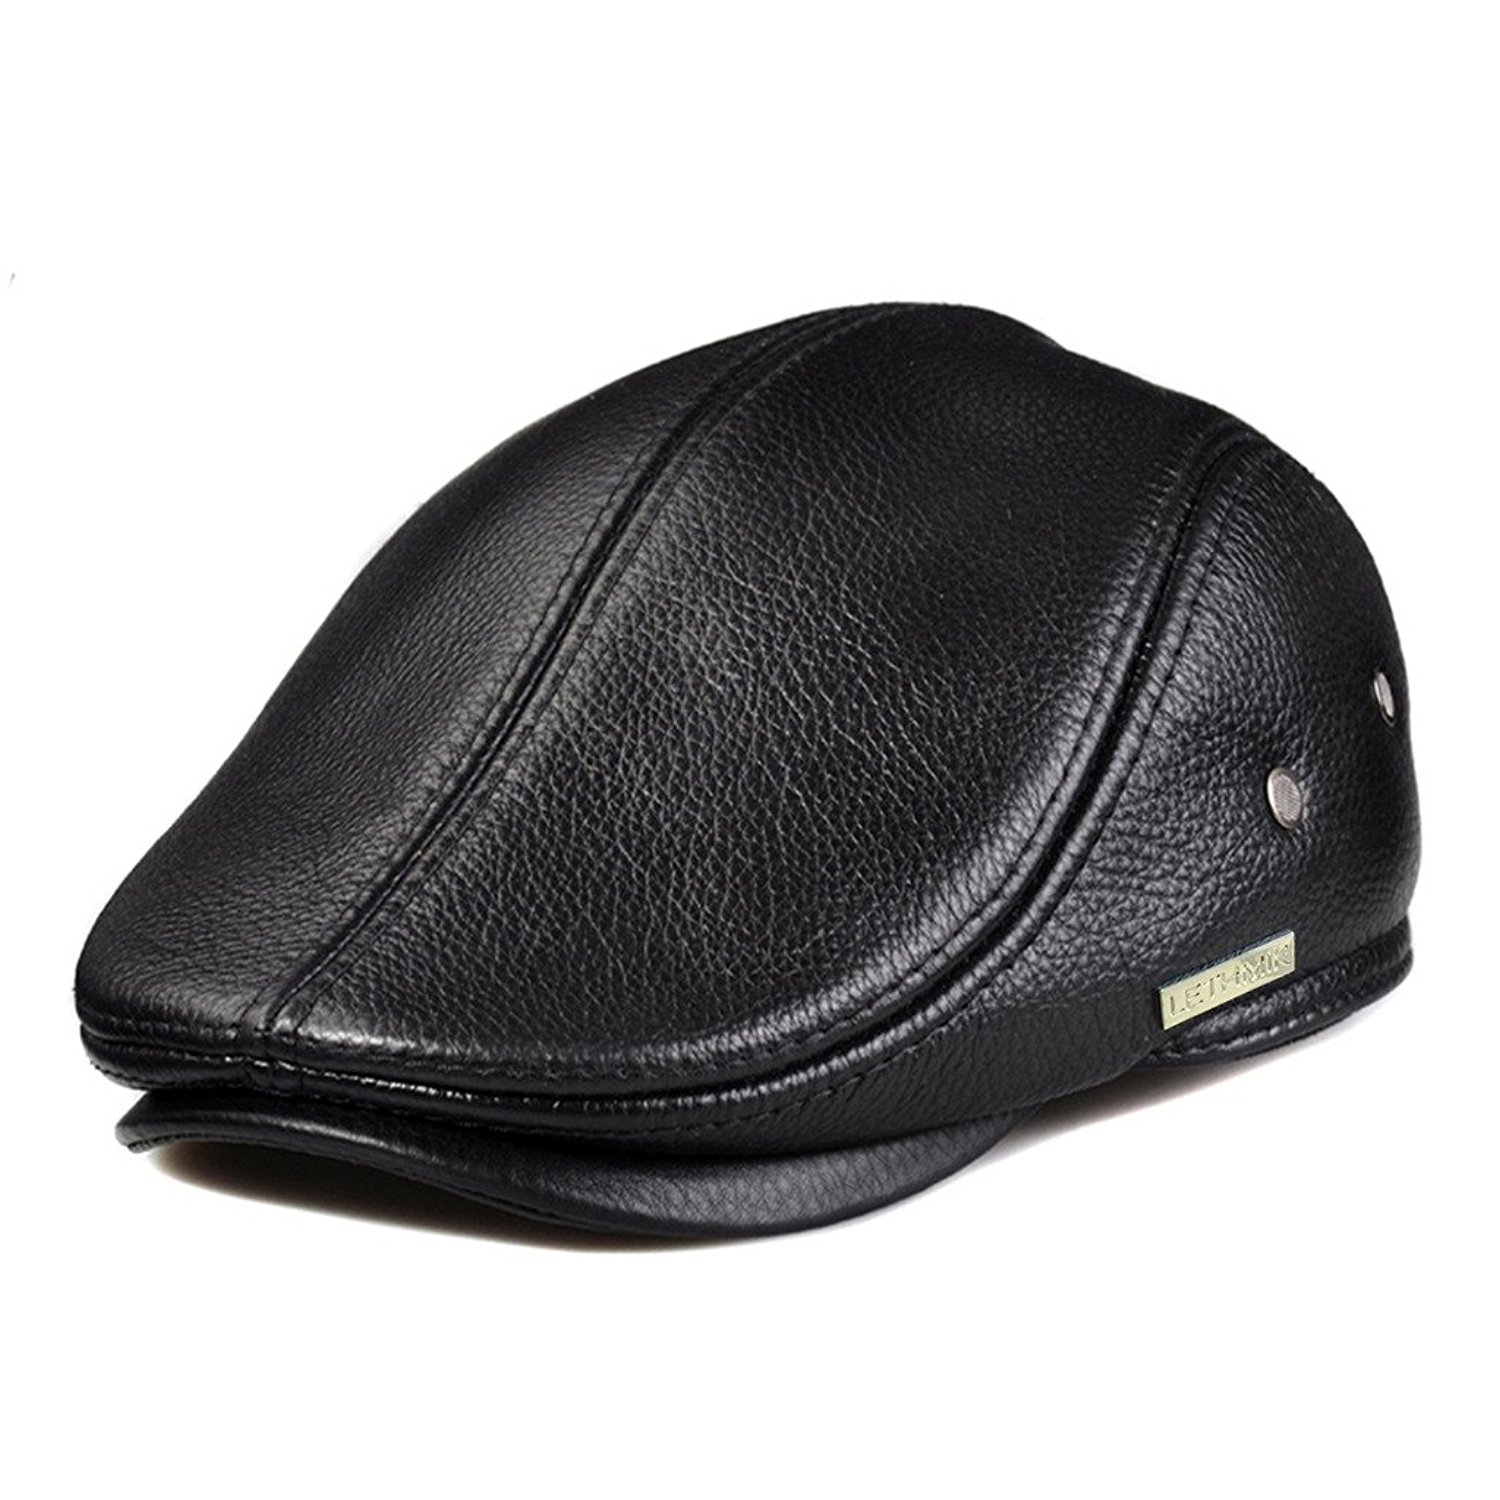 flat hat amazon.com: lethmik flat cap cabby hat genuine leather vintage newsboy cap  ivy driving WVEBQZA